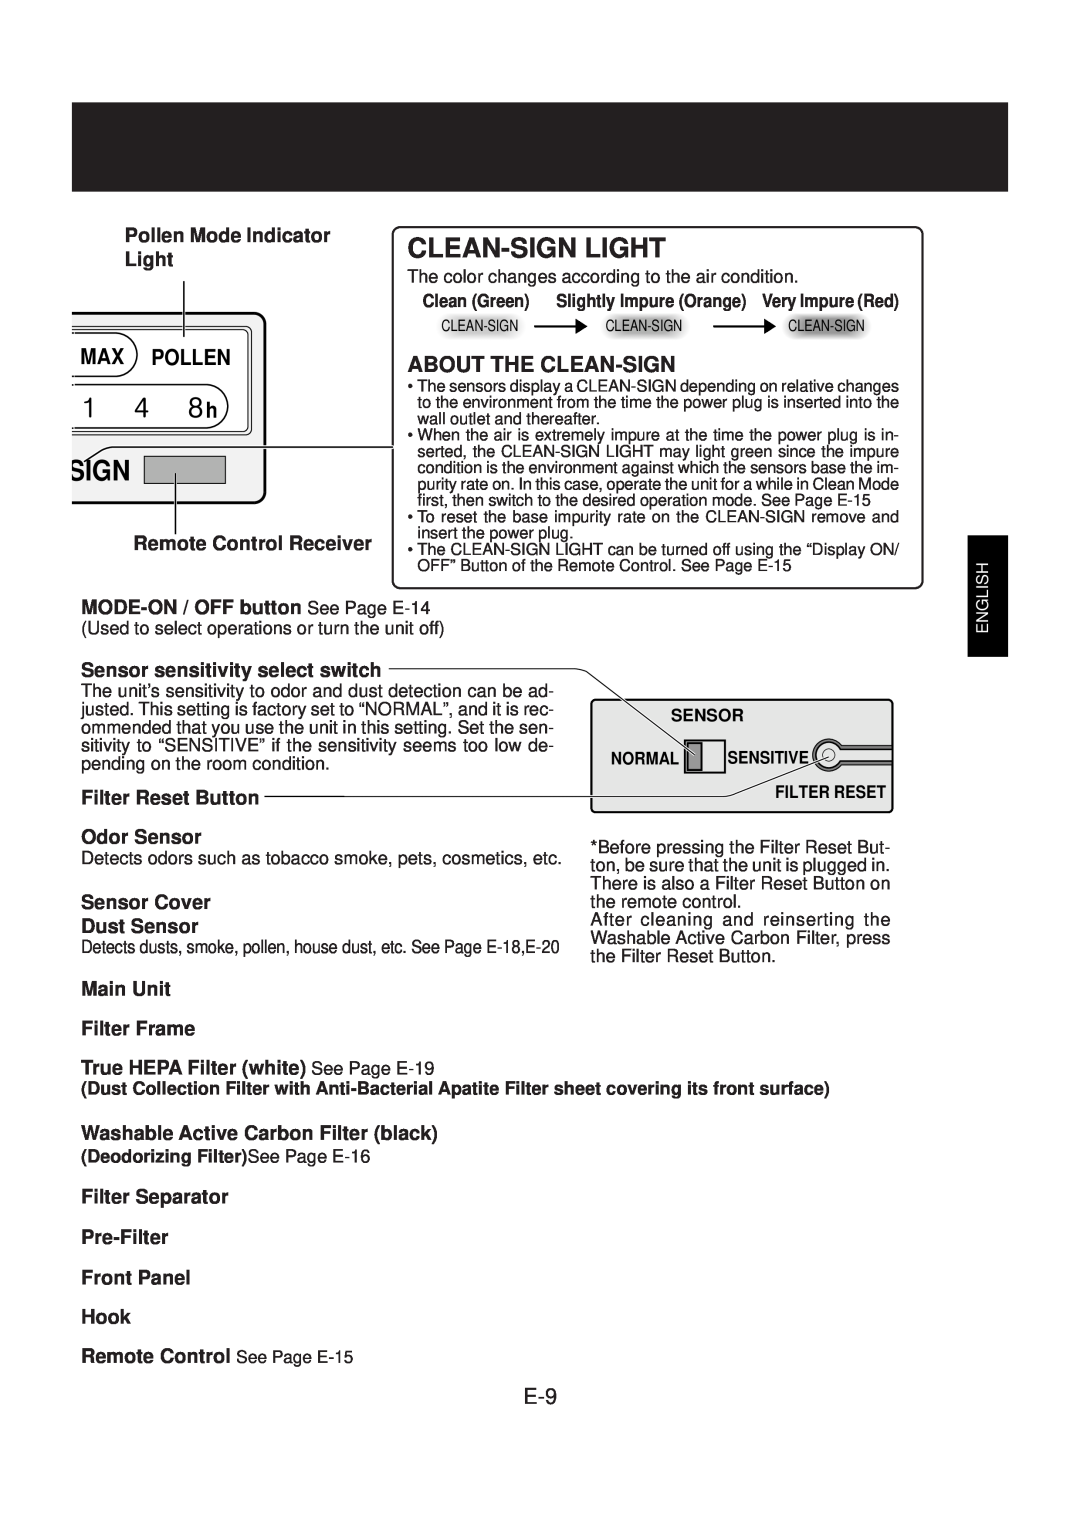 Sharp FP-N60CX operation manual Clean-Signlight, MAX POLLEN h 